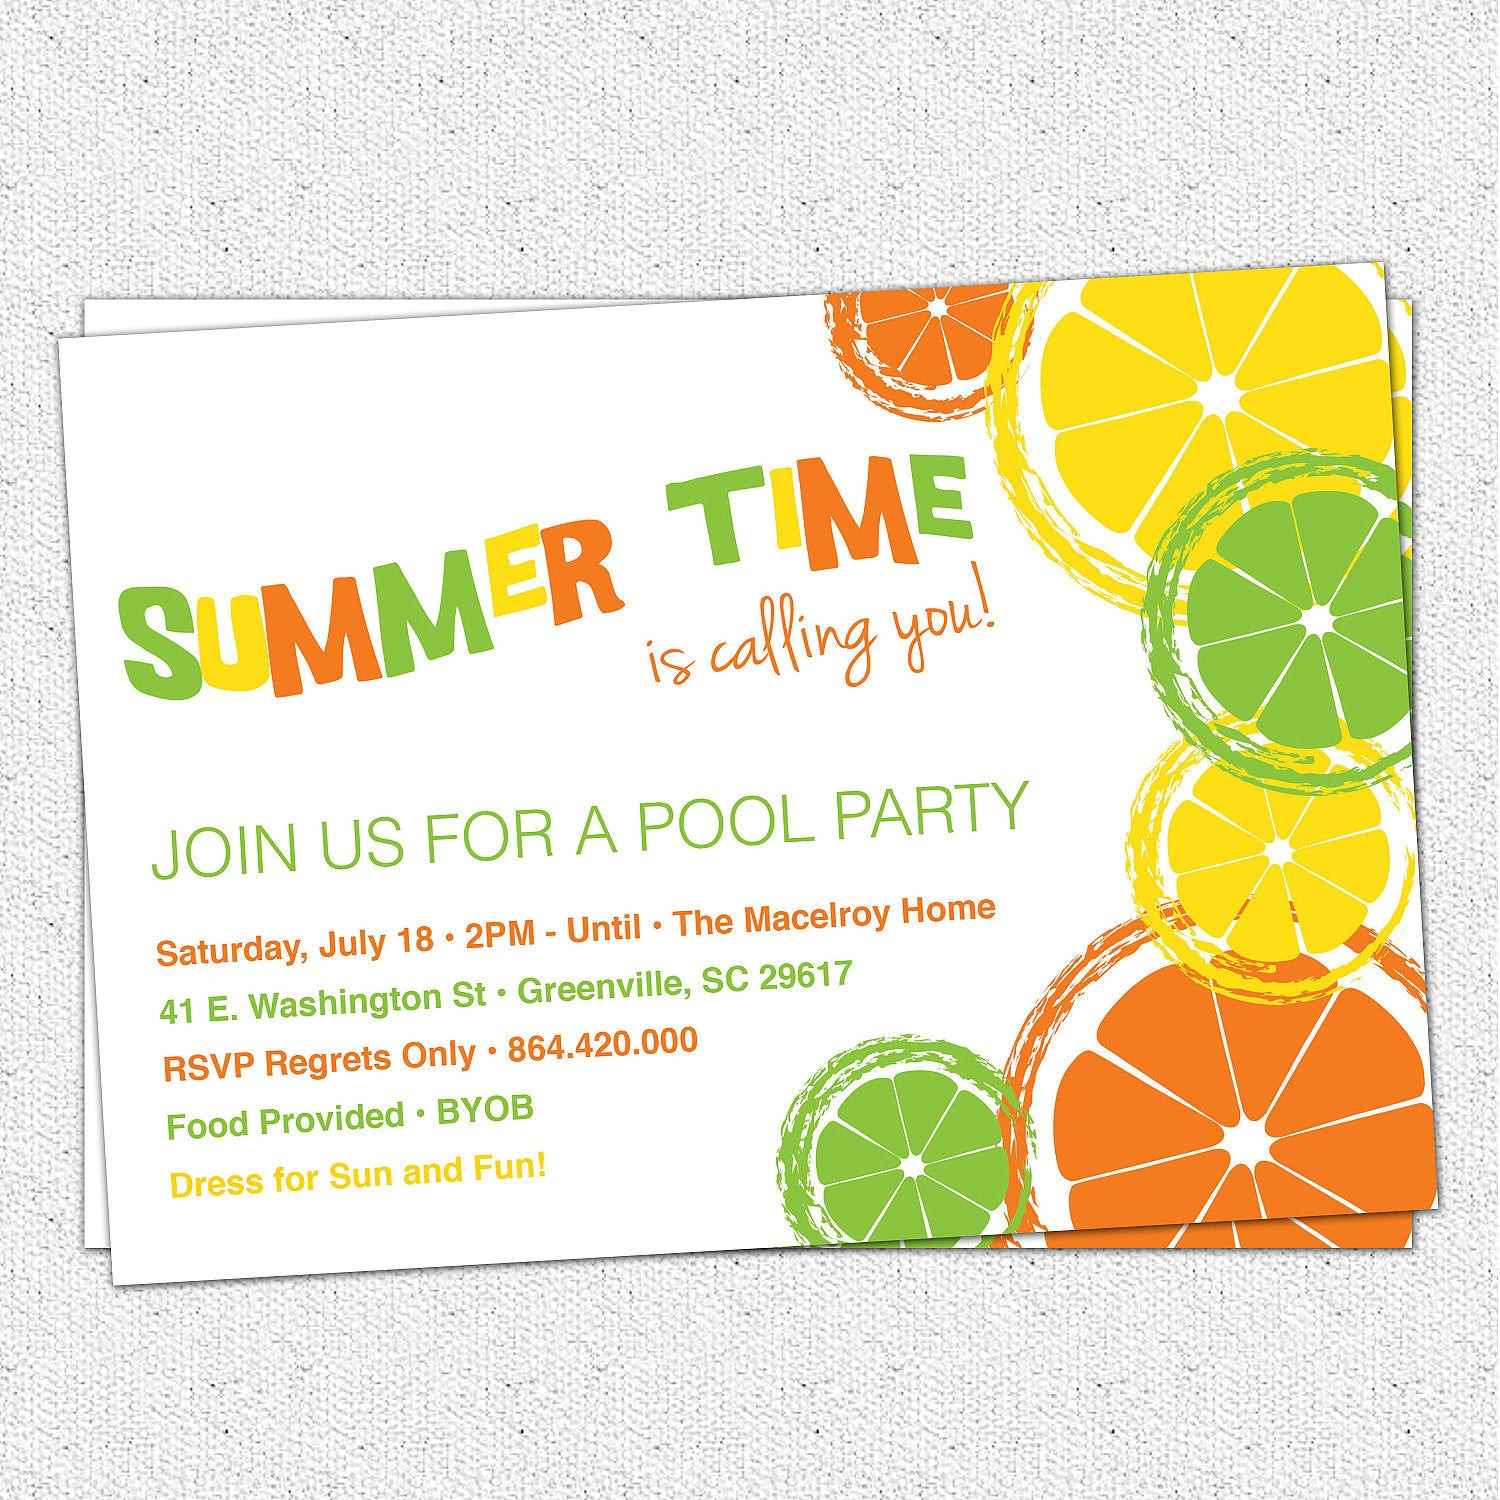 Summer Party Invitation Ideas
 Citrus Invitation Summer Pool Party Lemon Lime Orange